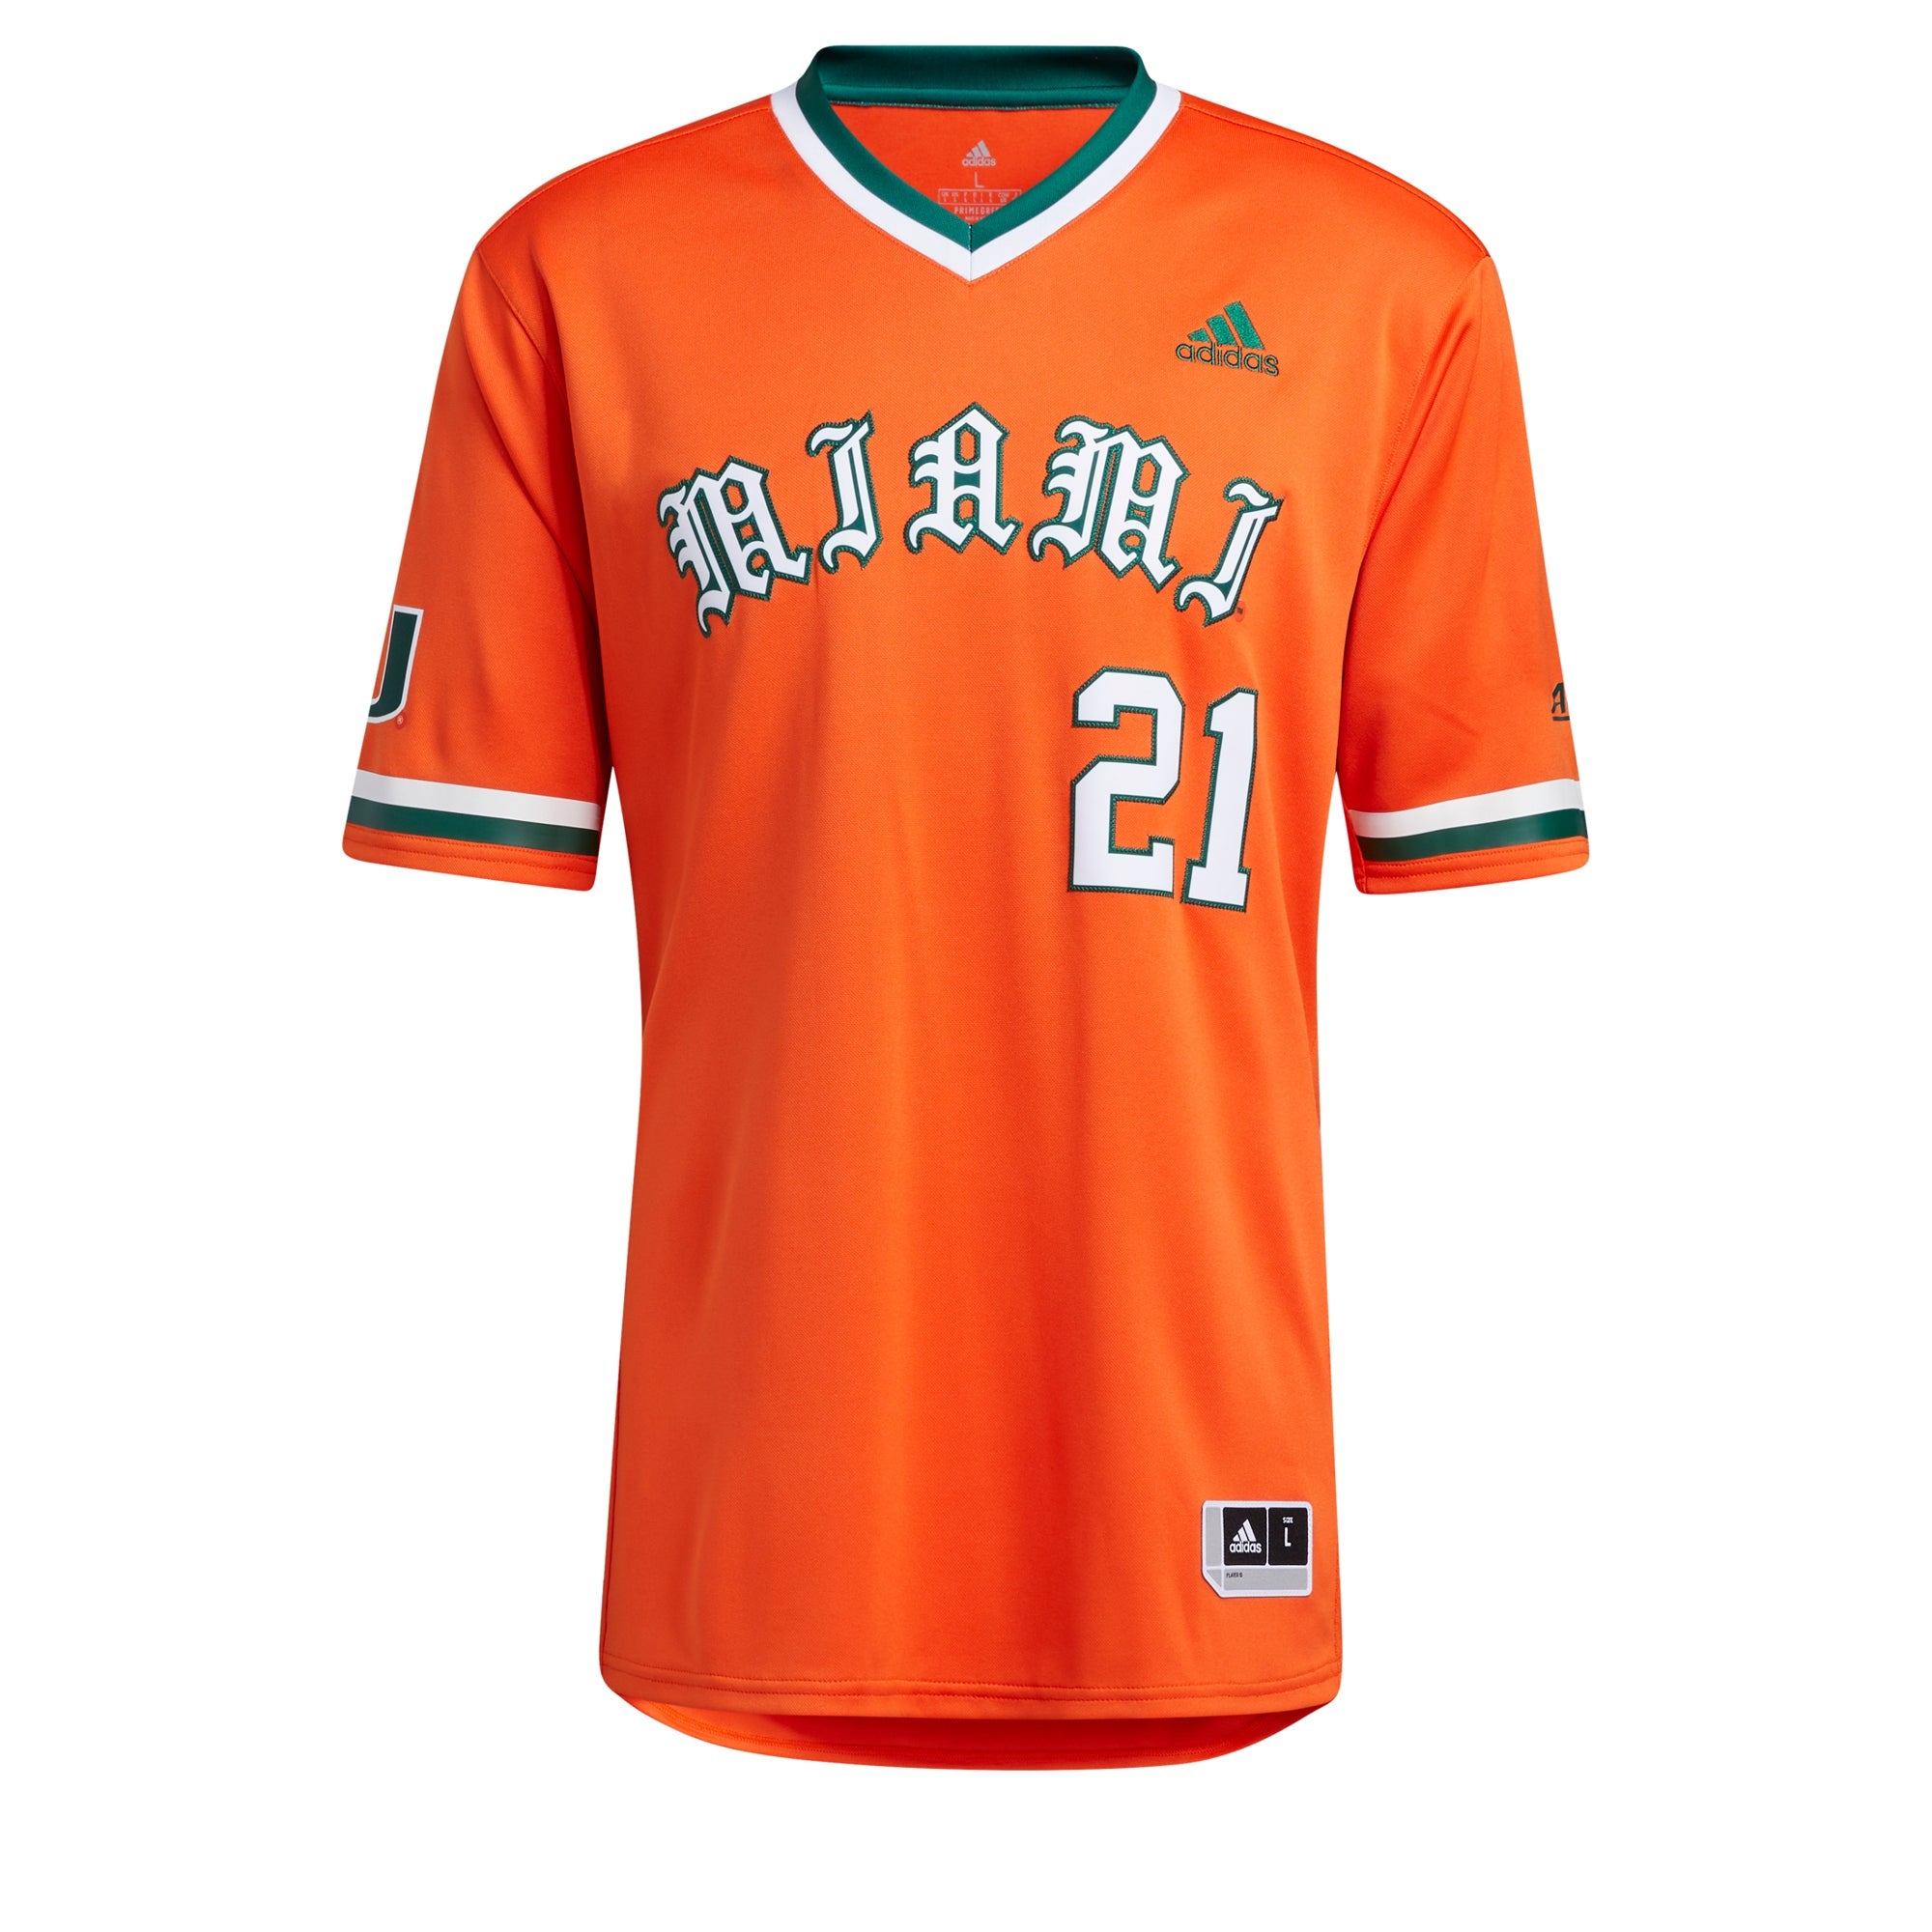 Miami Baseball Gear, Miami Hurricanes Baseball Jerseys, CWS Hats, Shirts